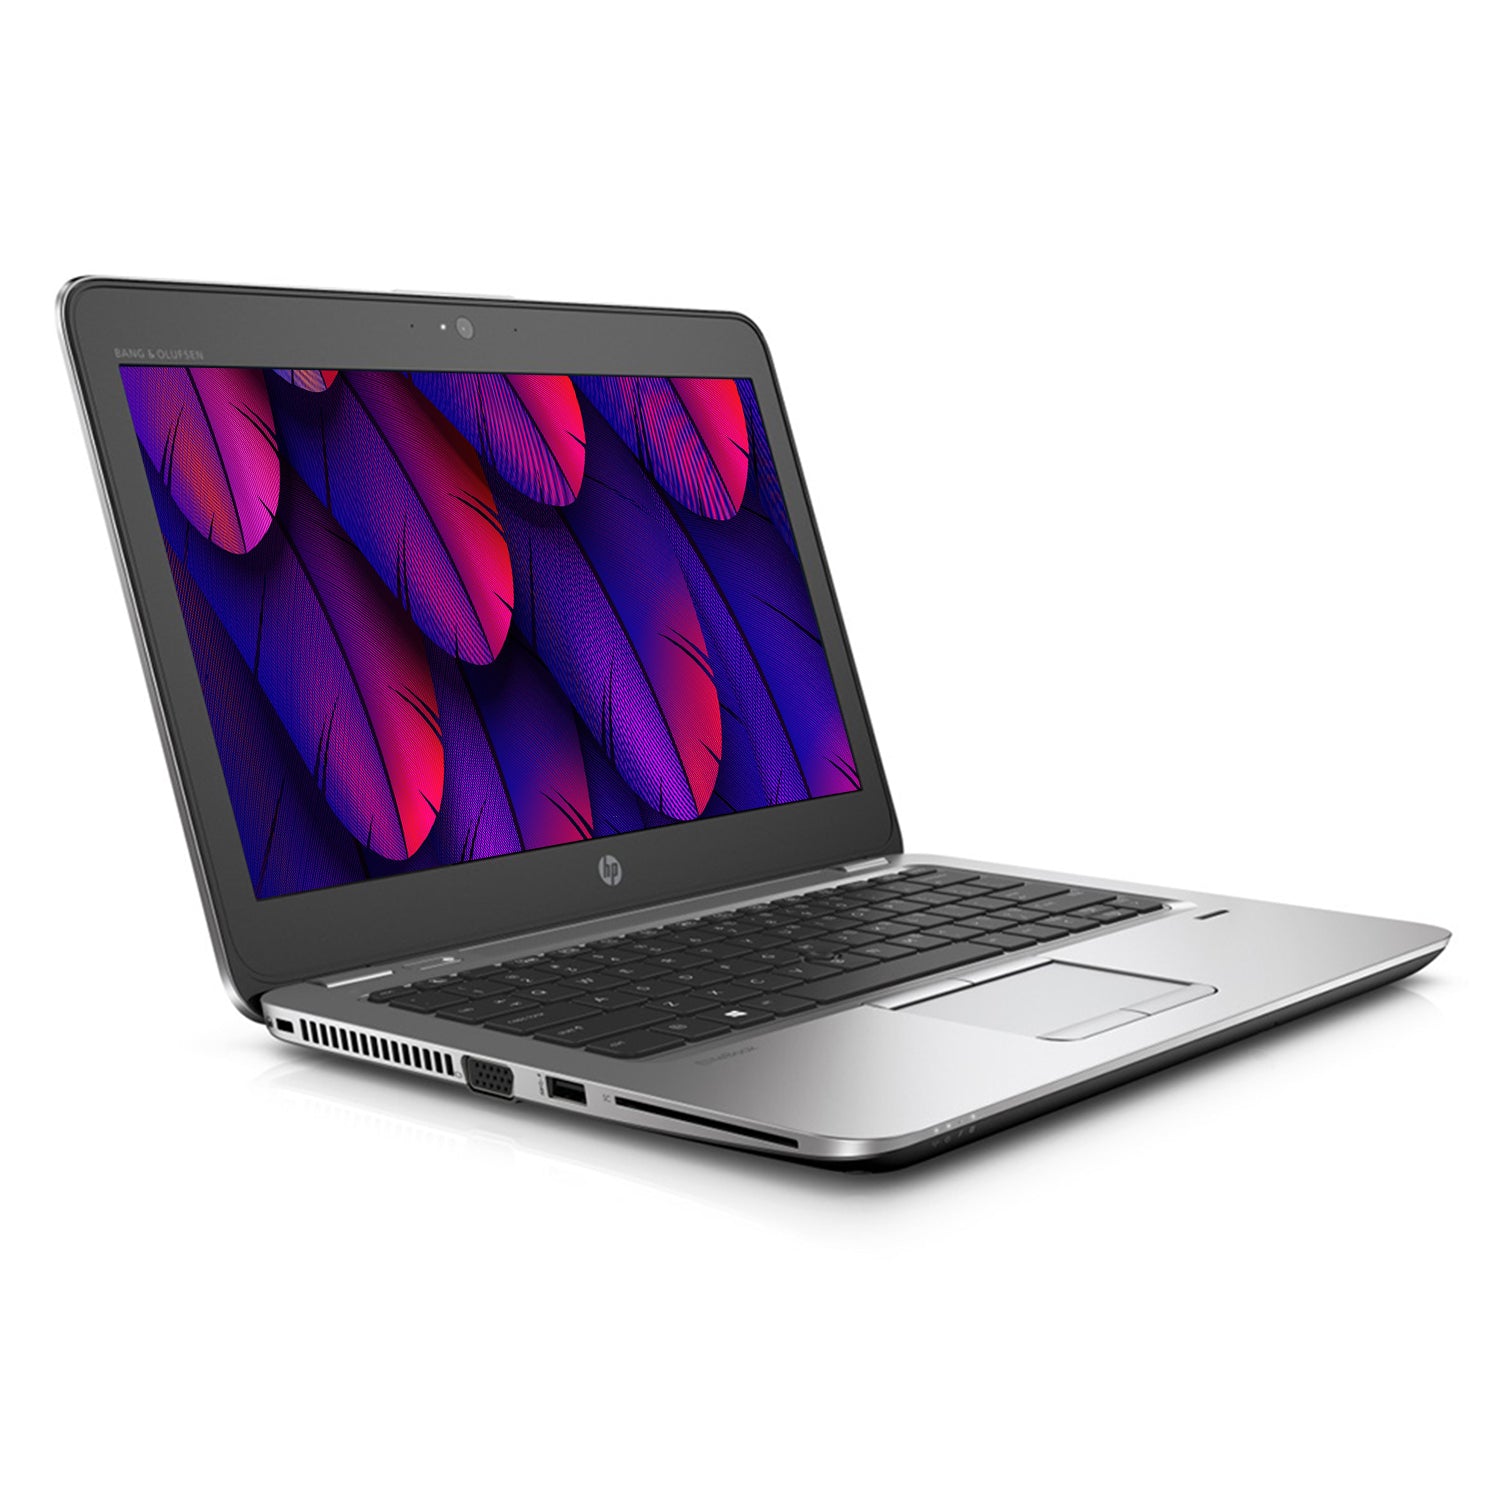 HP EliteBook 820 G4 Laptop 12.5 inch FHD Display, Intel Core i7-7600U upto 3.90 GHz, 8GB - 16 GbRAM, 256GB -1TBSSD, Touch Screen, Backlit Keyboard, Webcam, WiFi, Windows 10 Pro - Refurbished